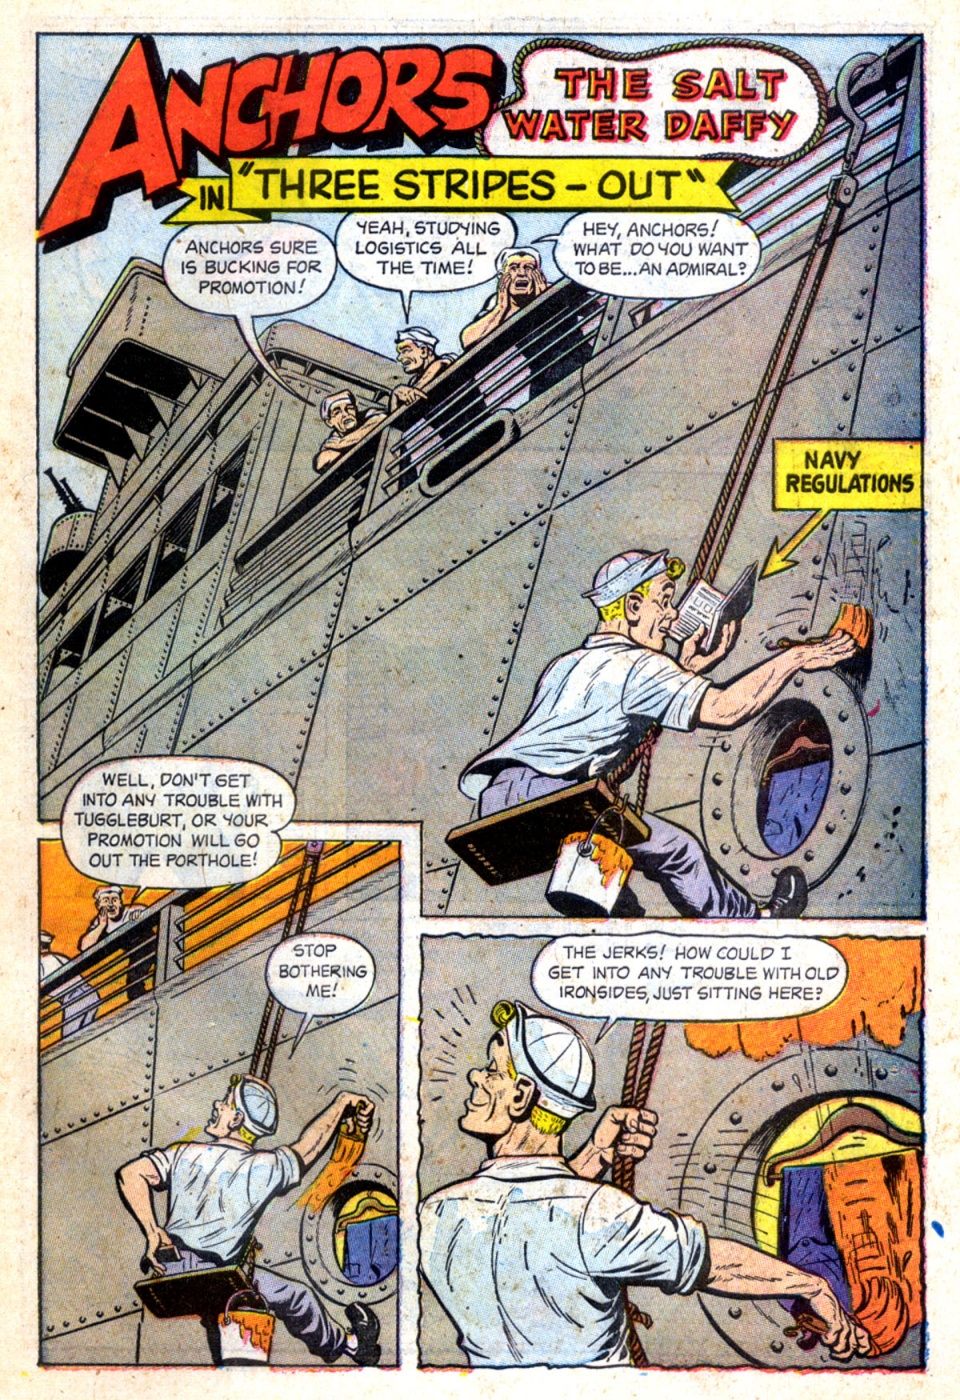 Anchors the Salt Water Daffy - Comics (c) (29)